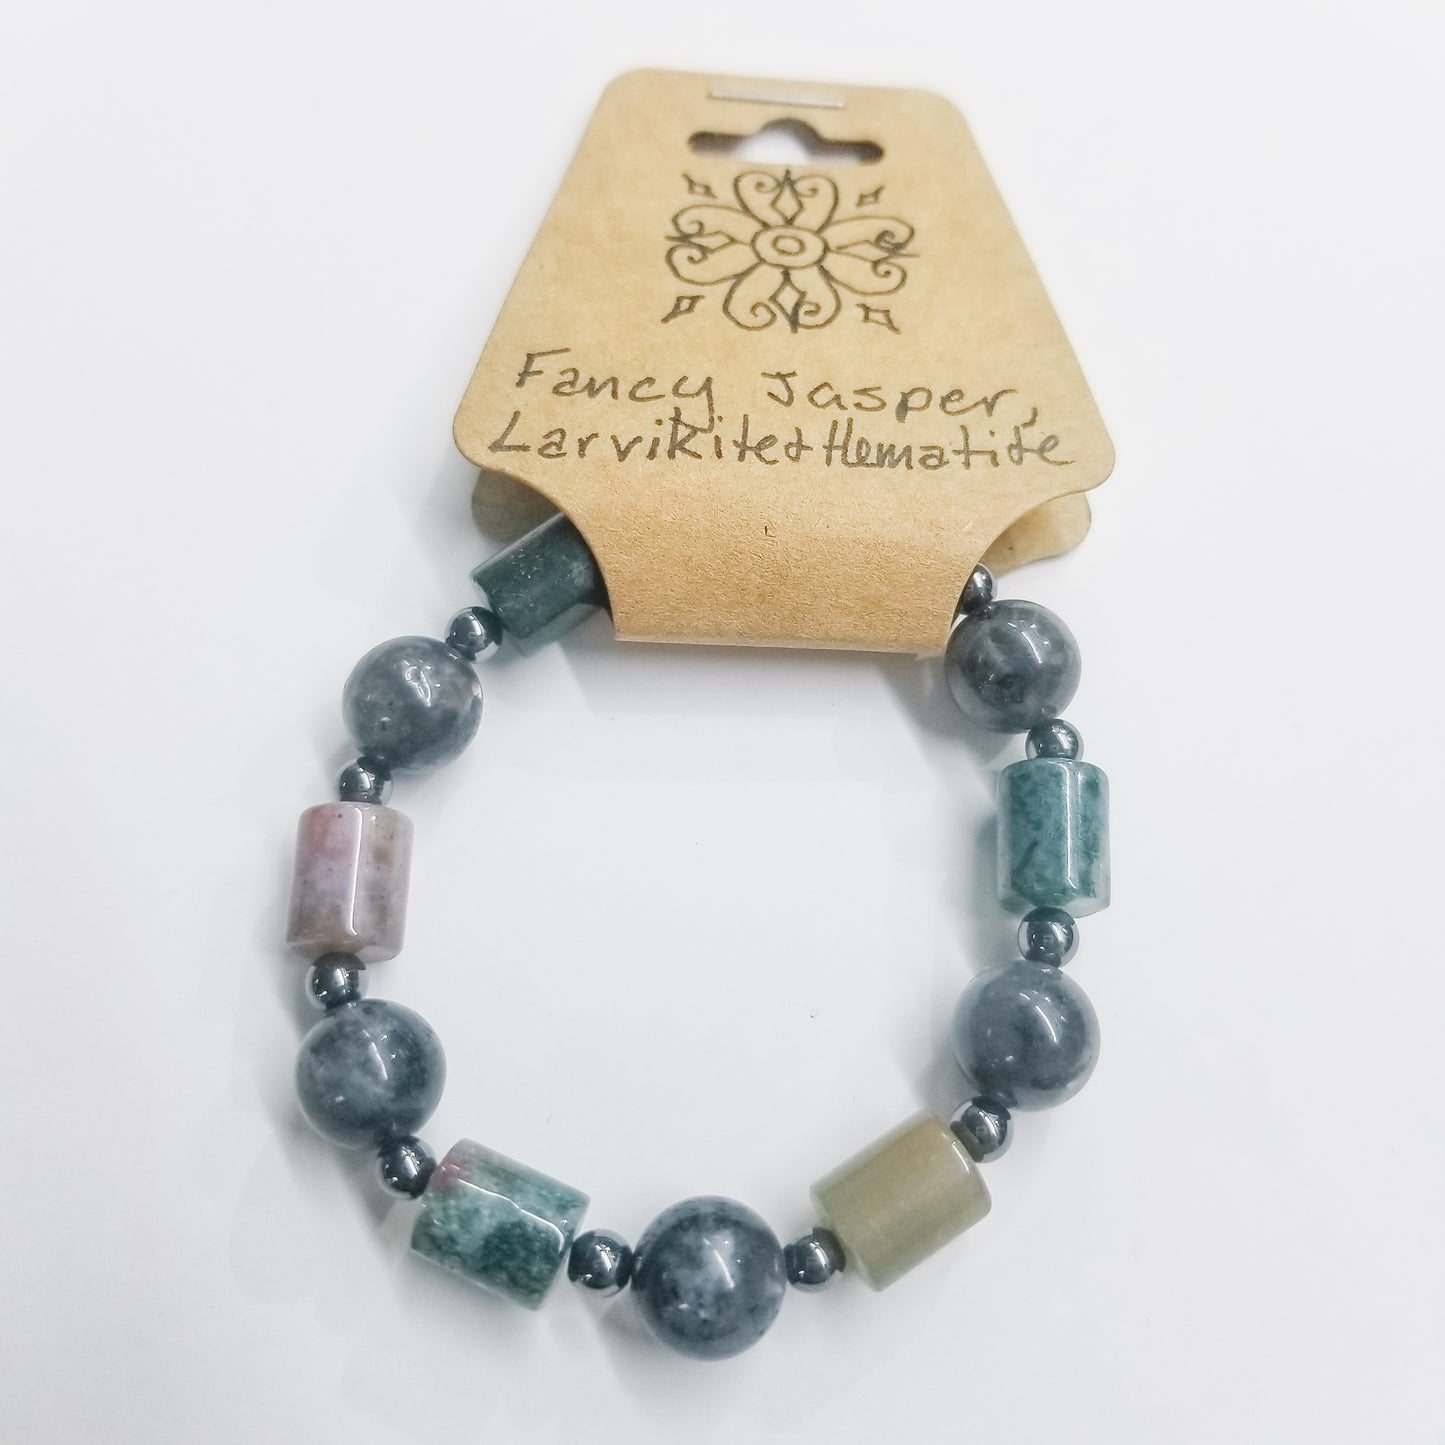 Fancy Jasper, Larvikite & Hematite Crystal Bracelet